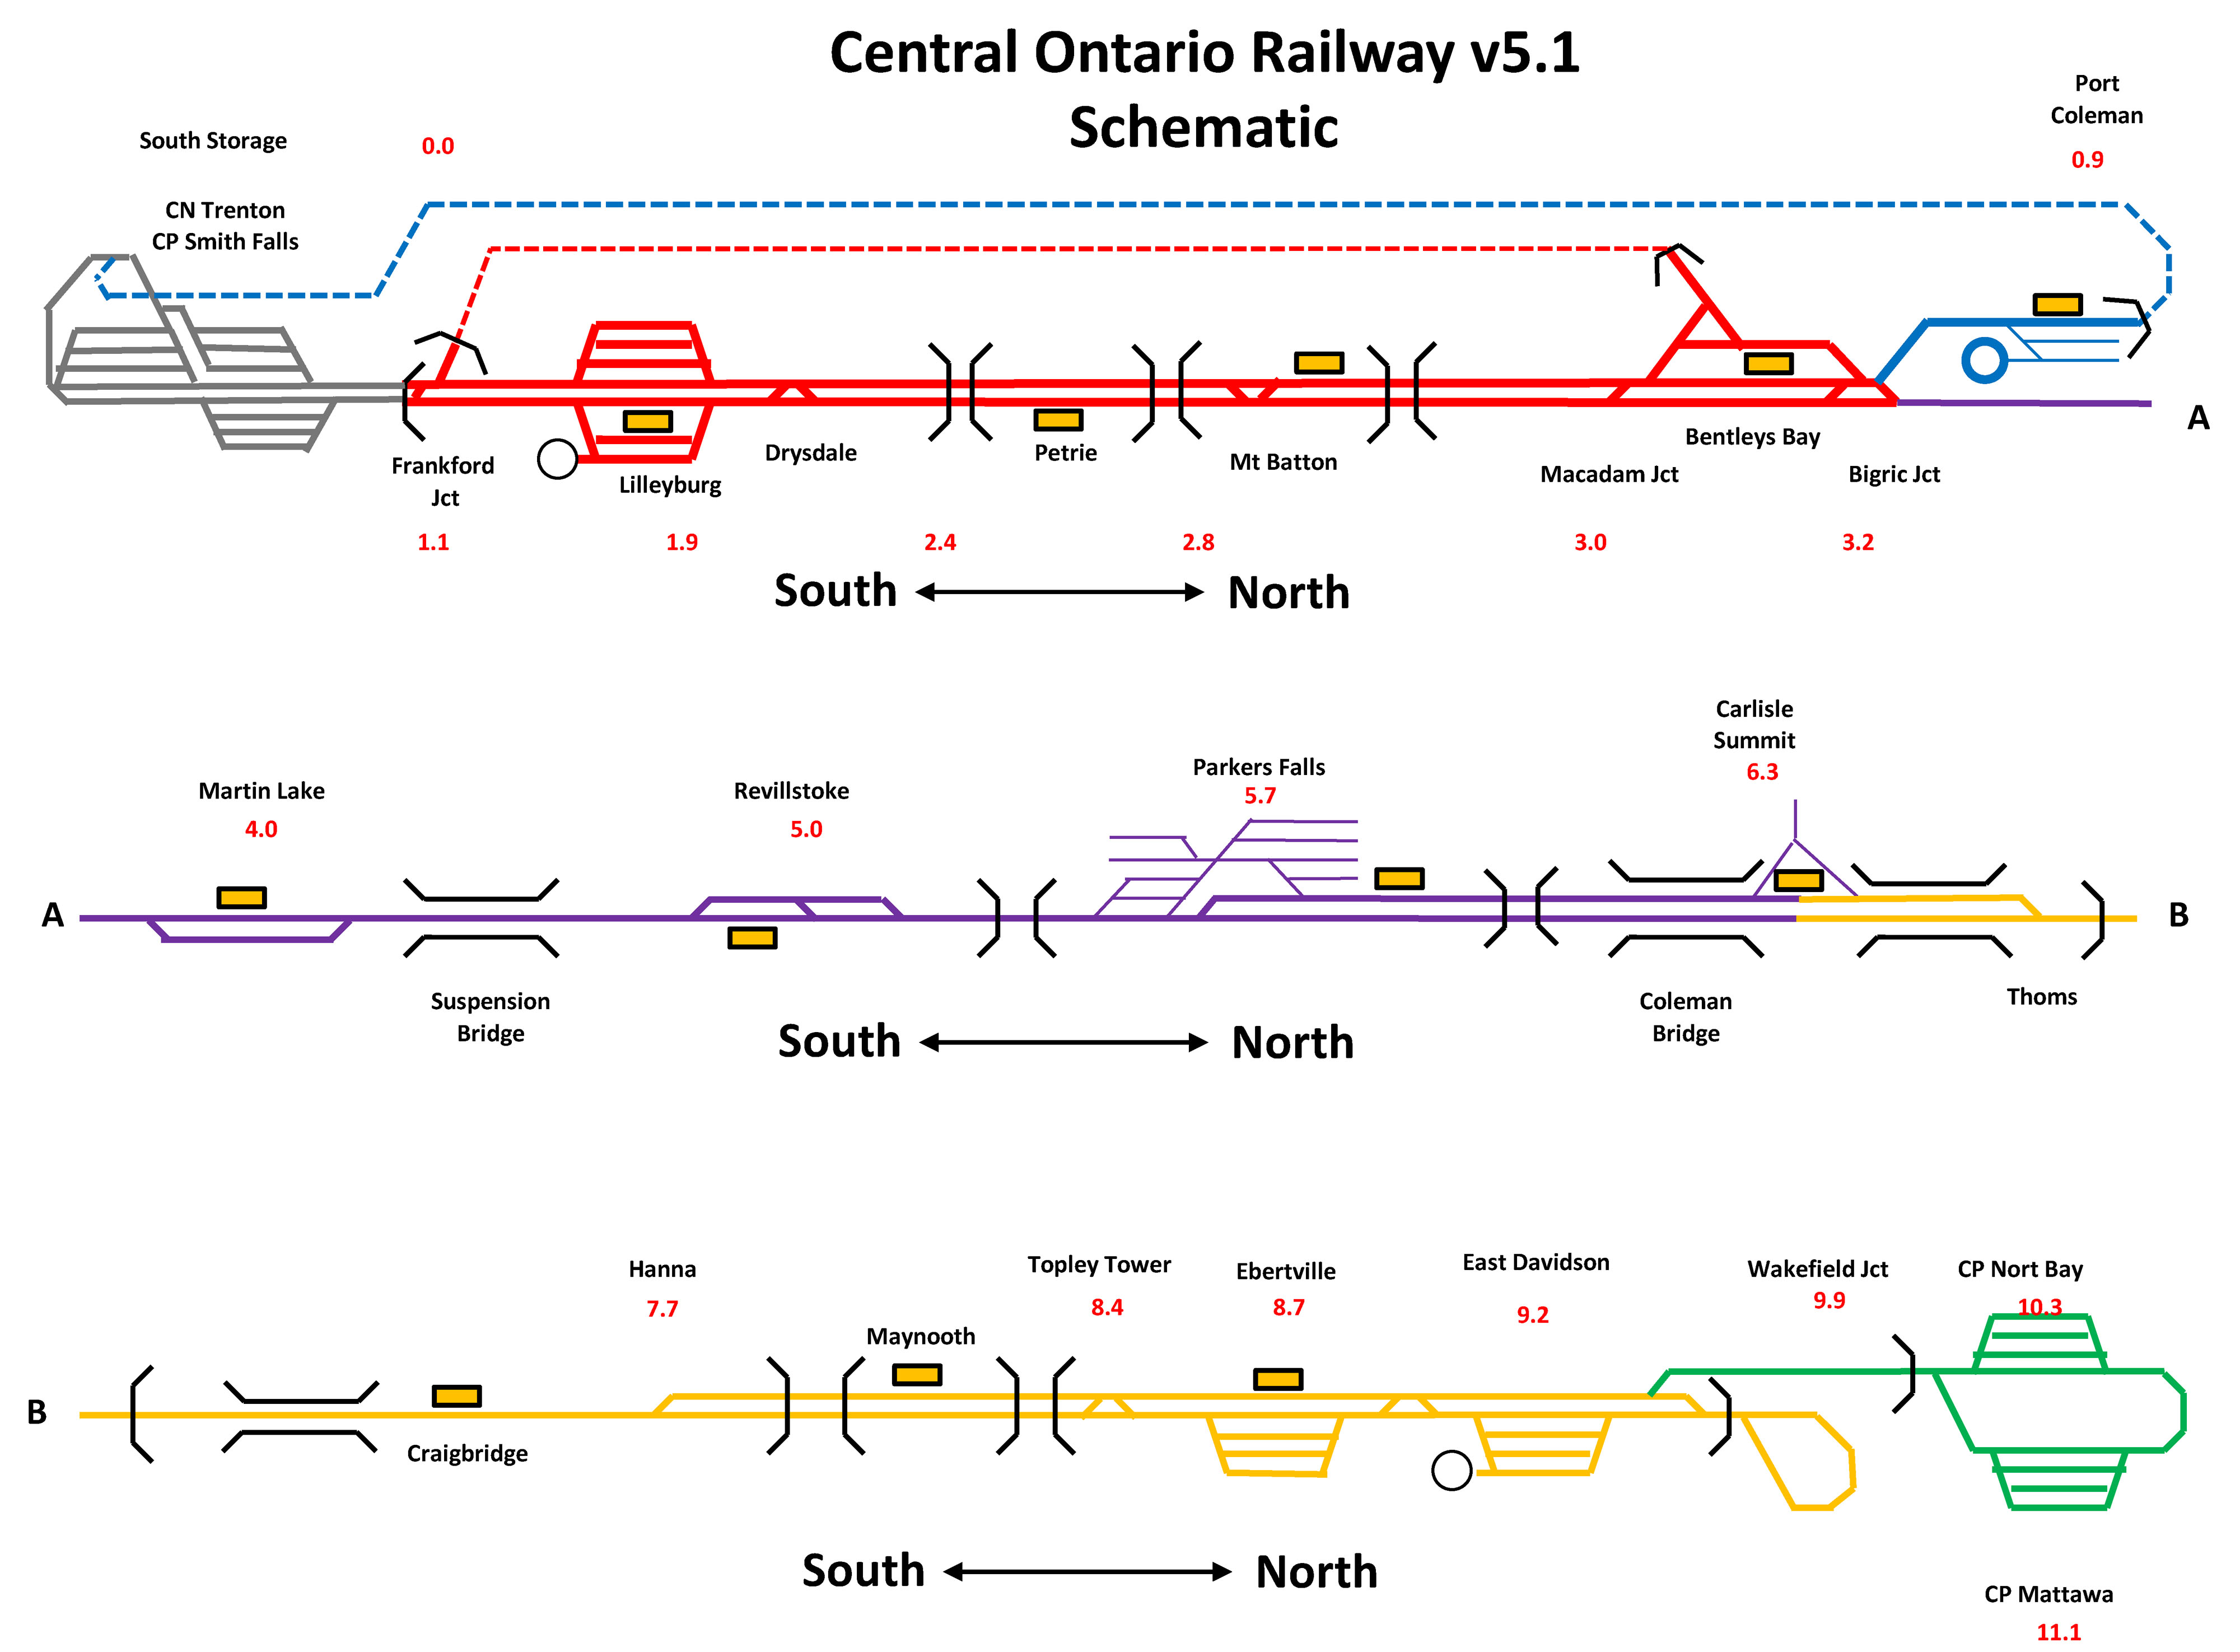 Central Ontario Railway - Schematic